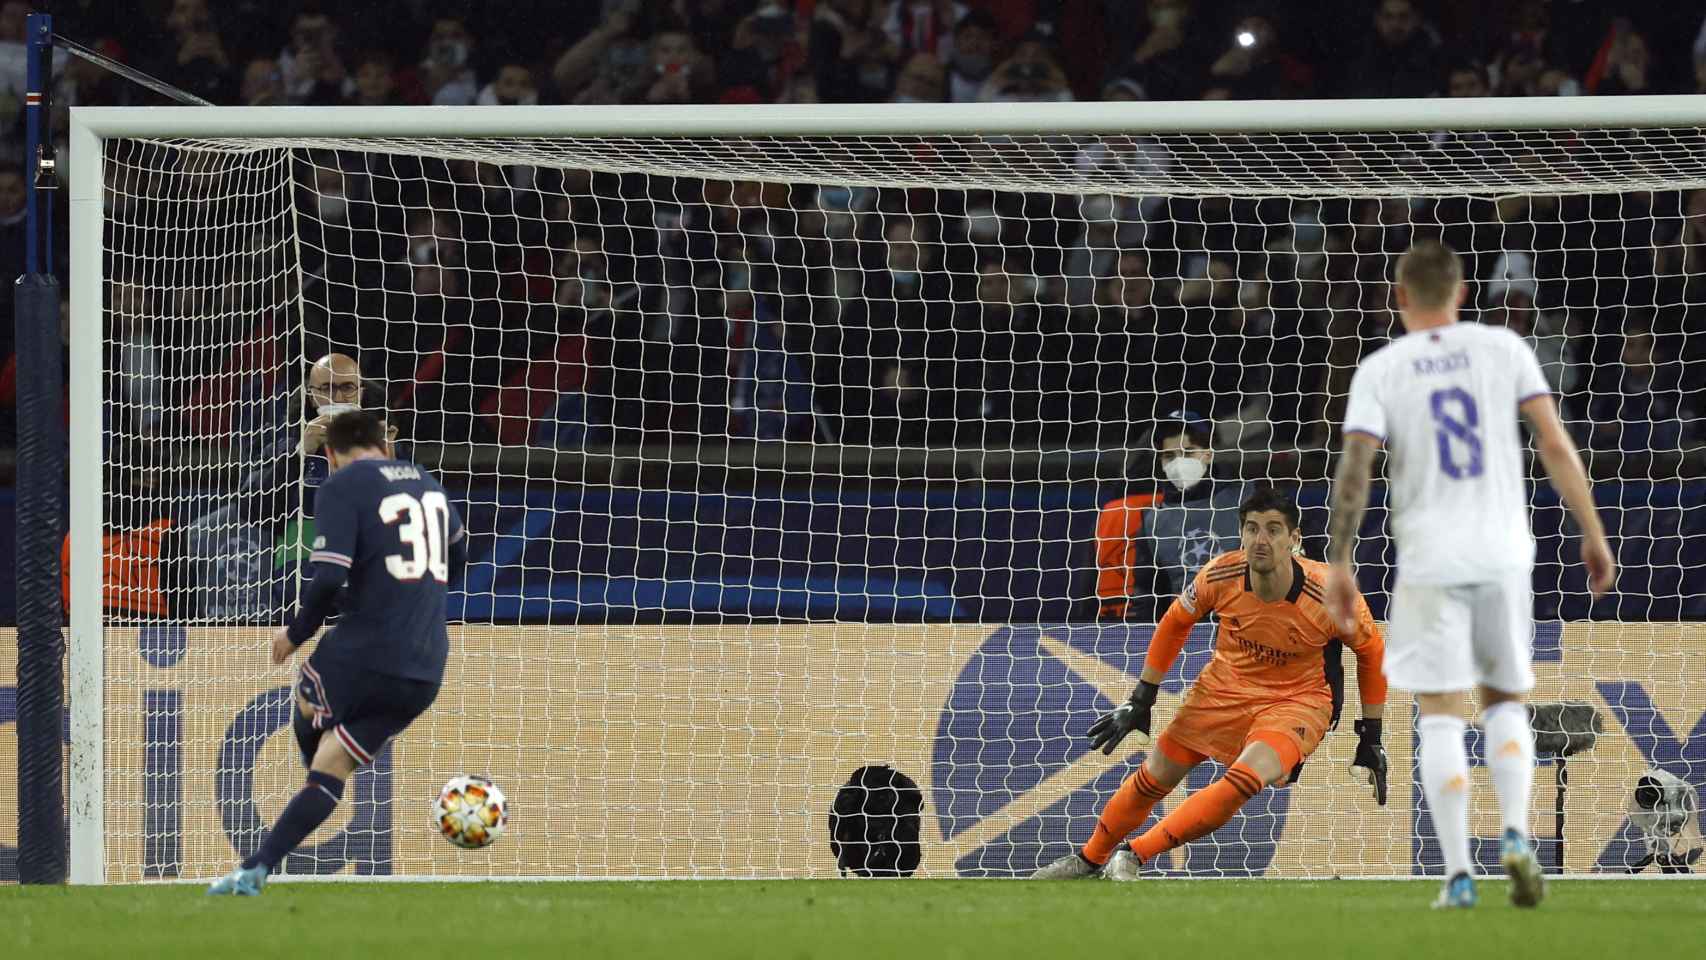 Leo Messi dispara de penalti y Thibaut Courtois lo para